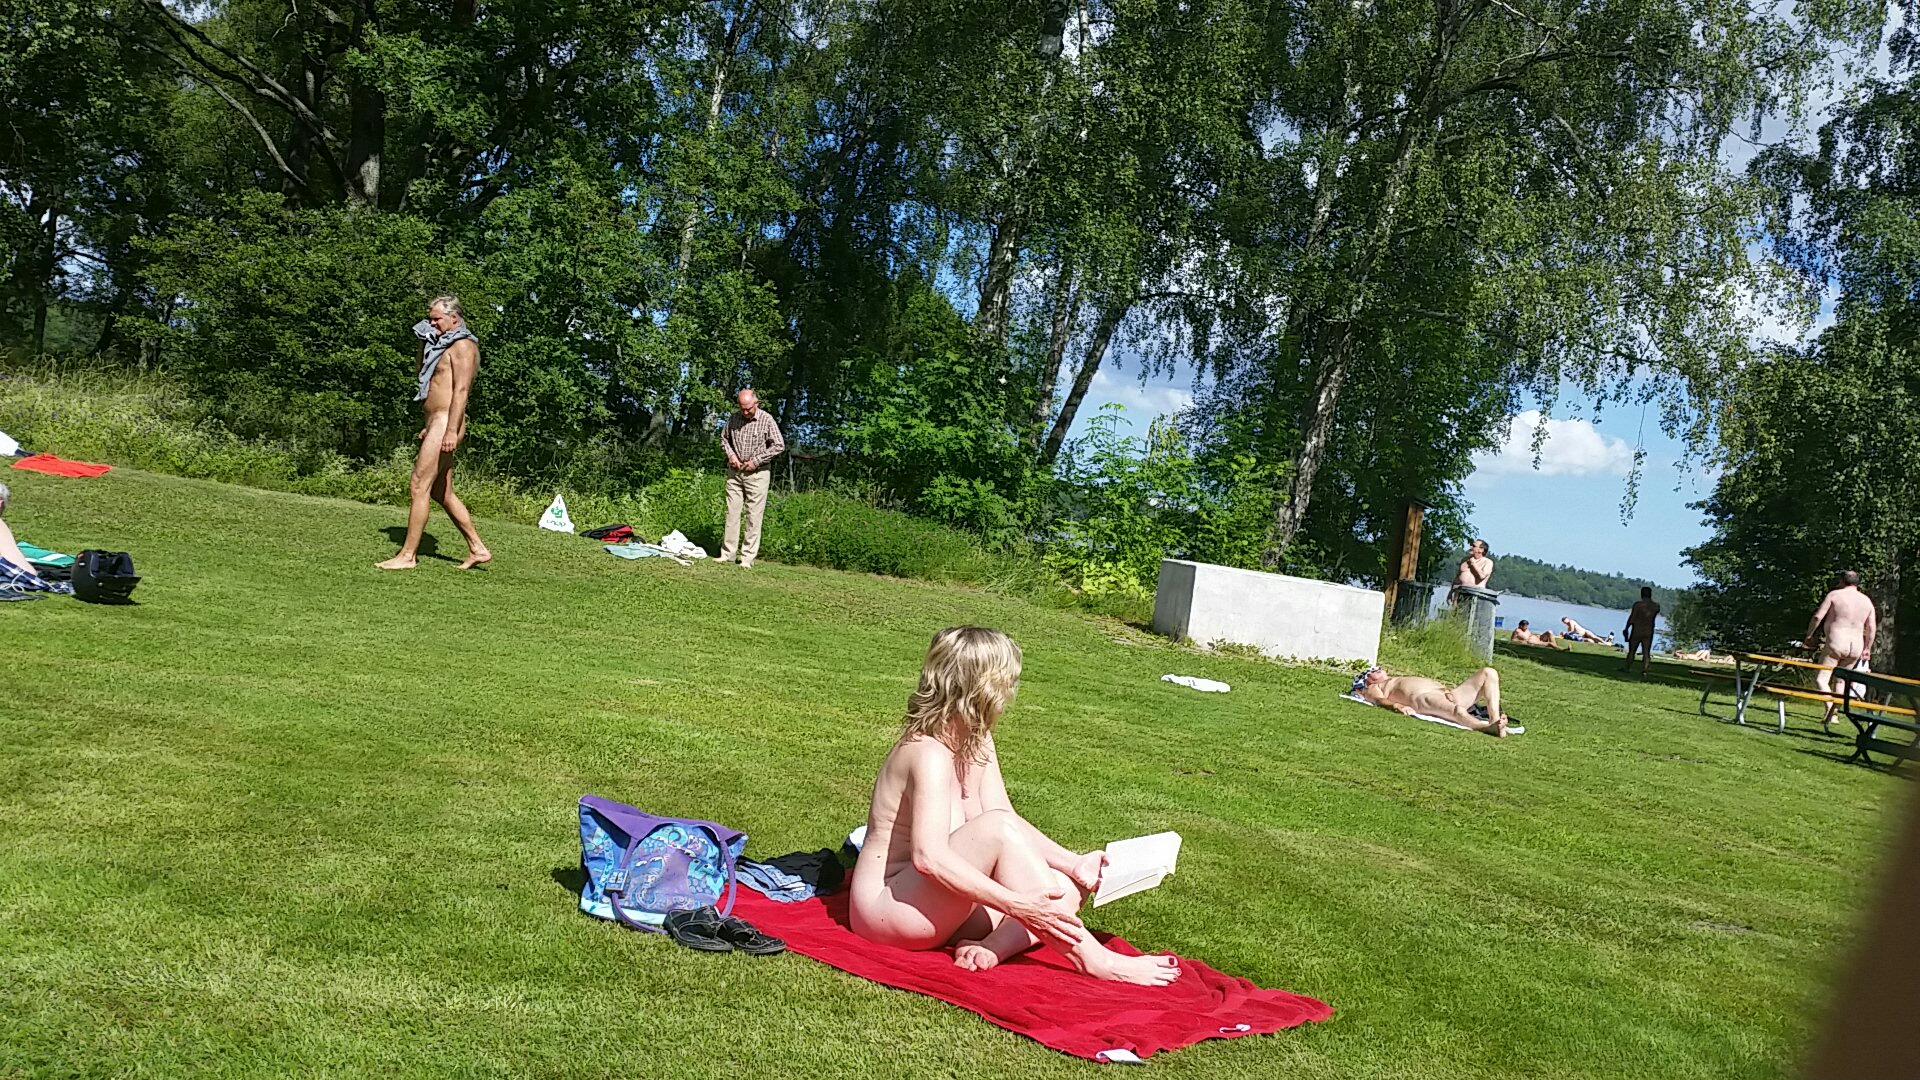 debra pritt recommends nude beaches in sweden pic